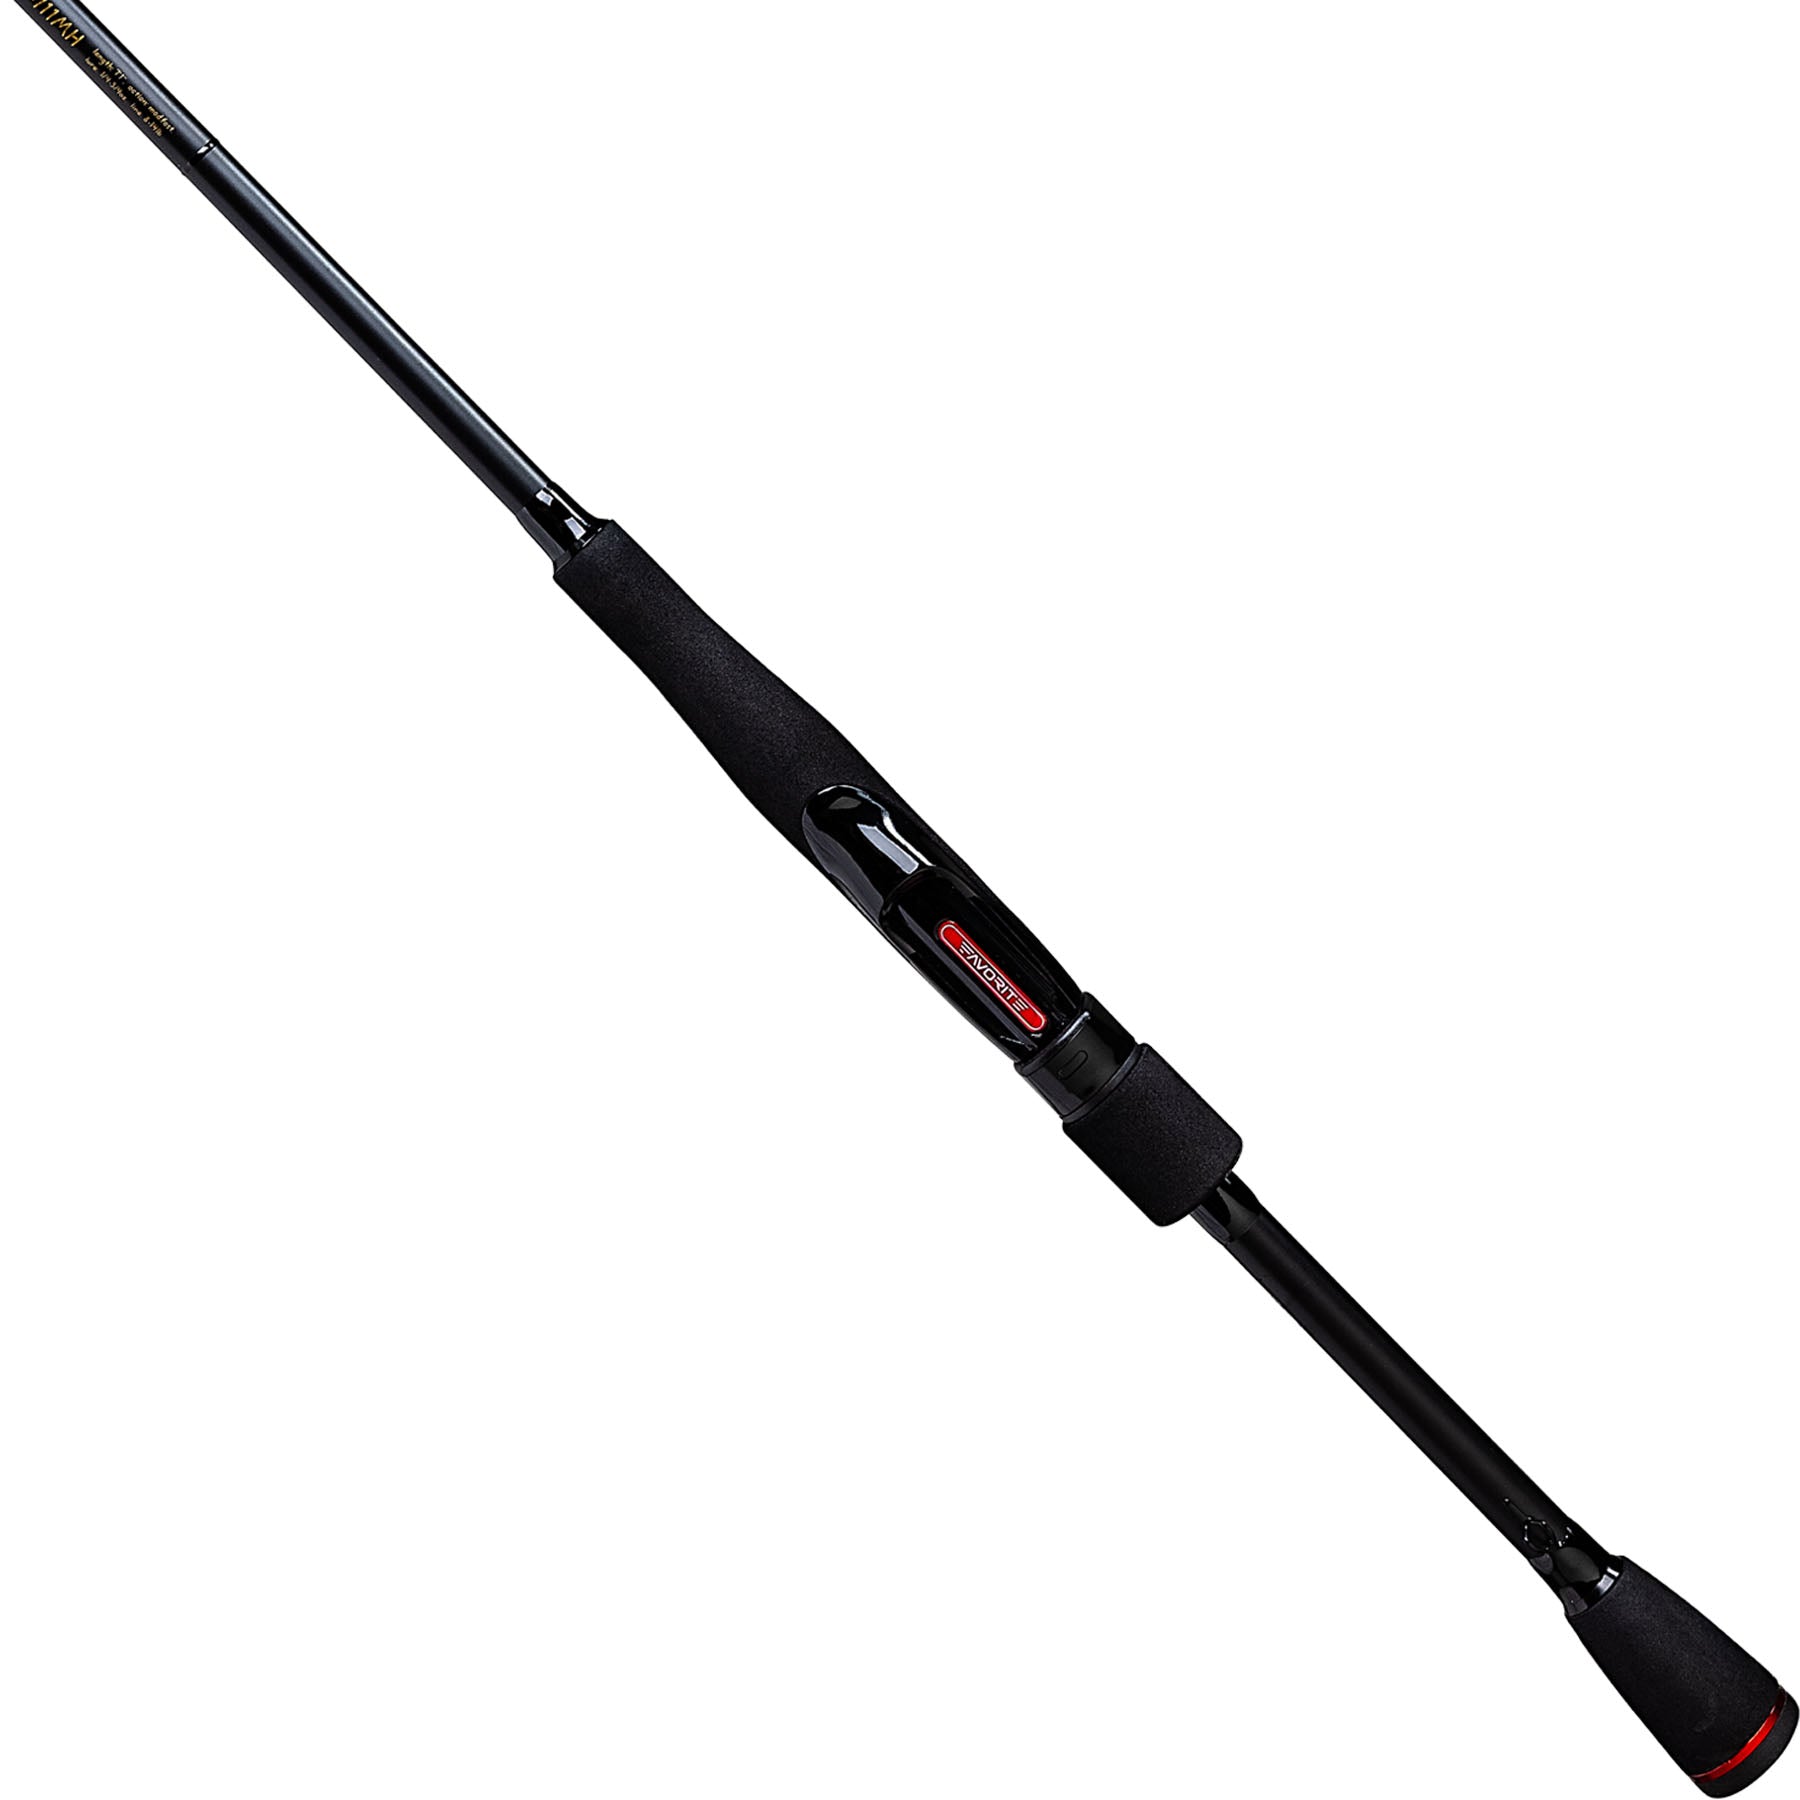 Favorite Fishing Sick Stick Blat Casting Rod SKSC-BLAT-6101M with